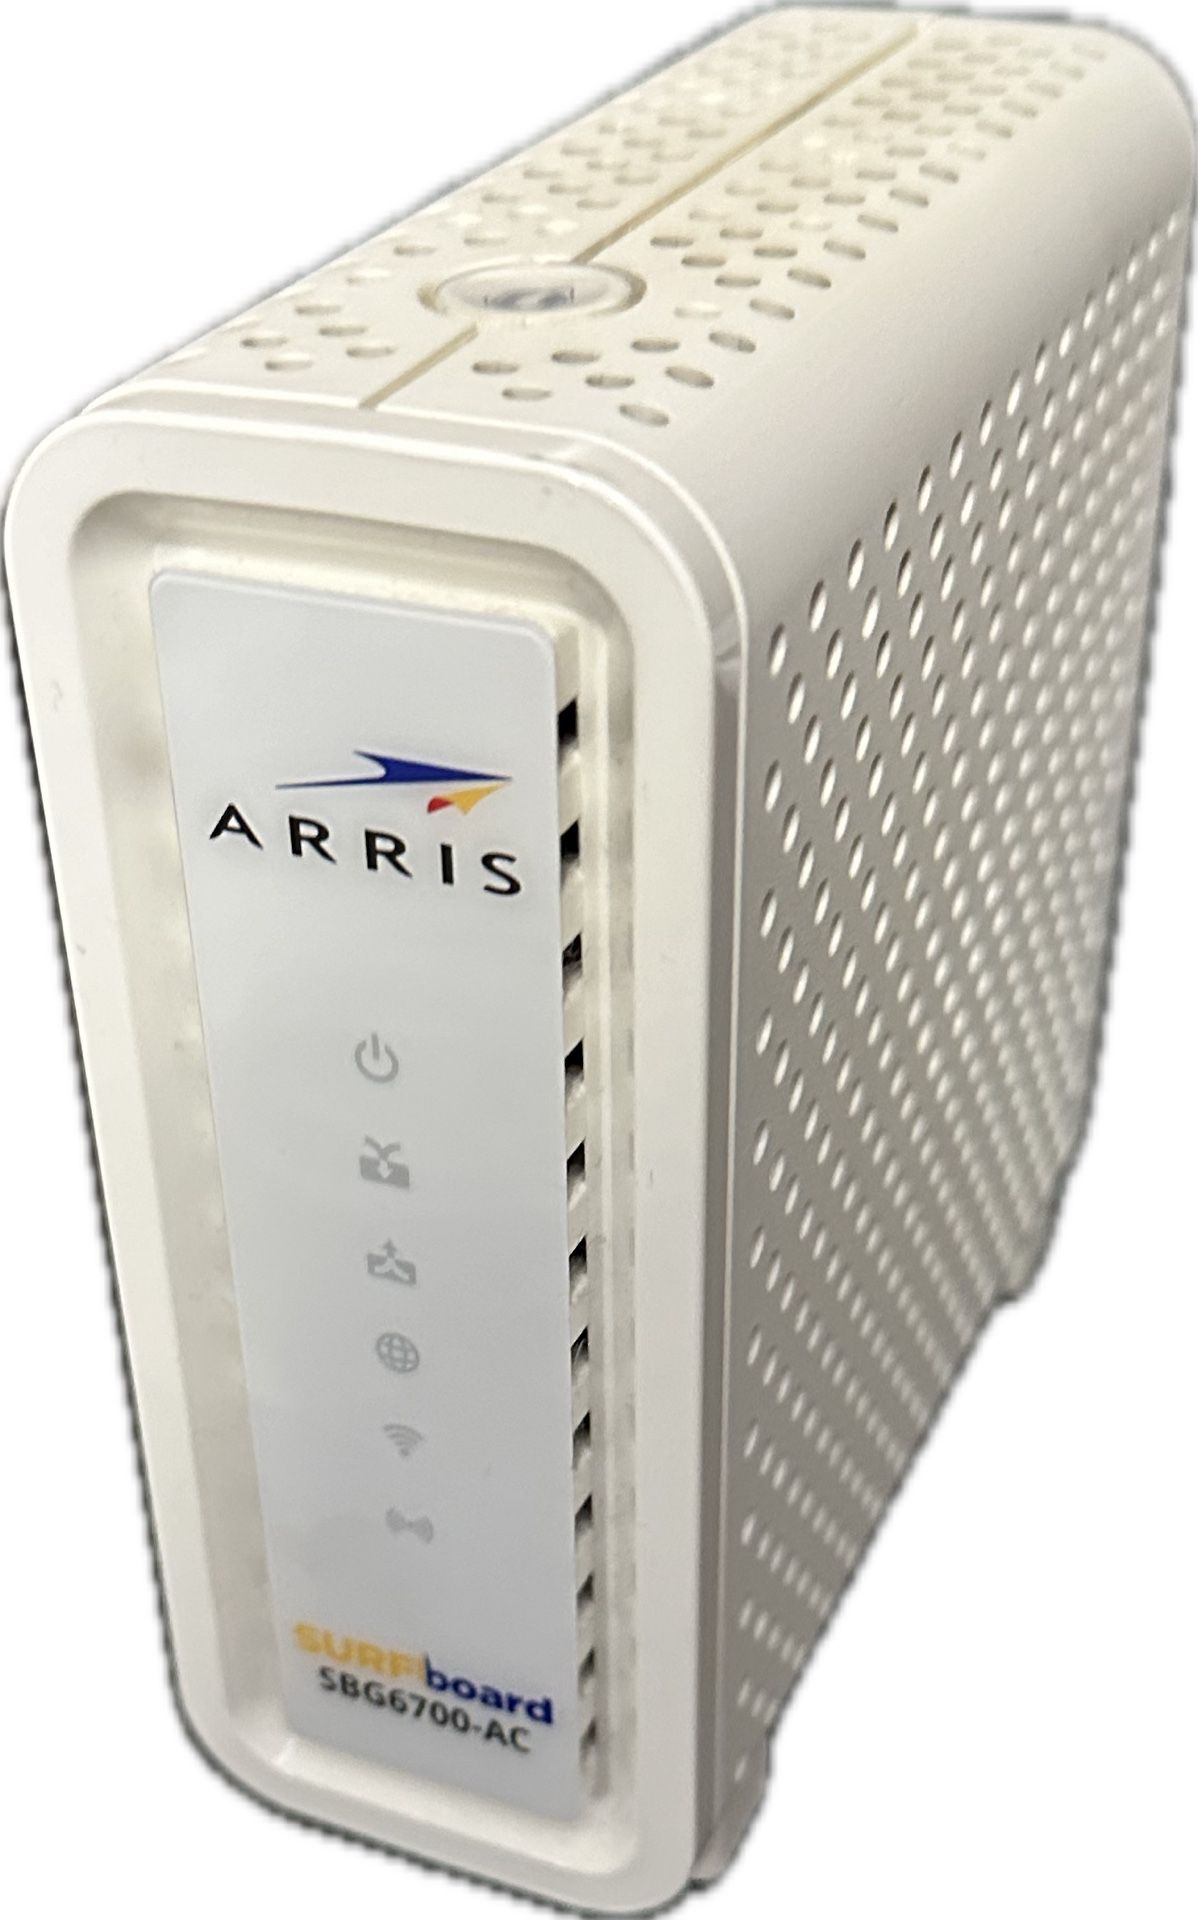 Arris Cable Modem/wifi Router